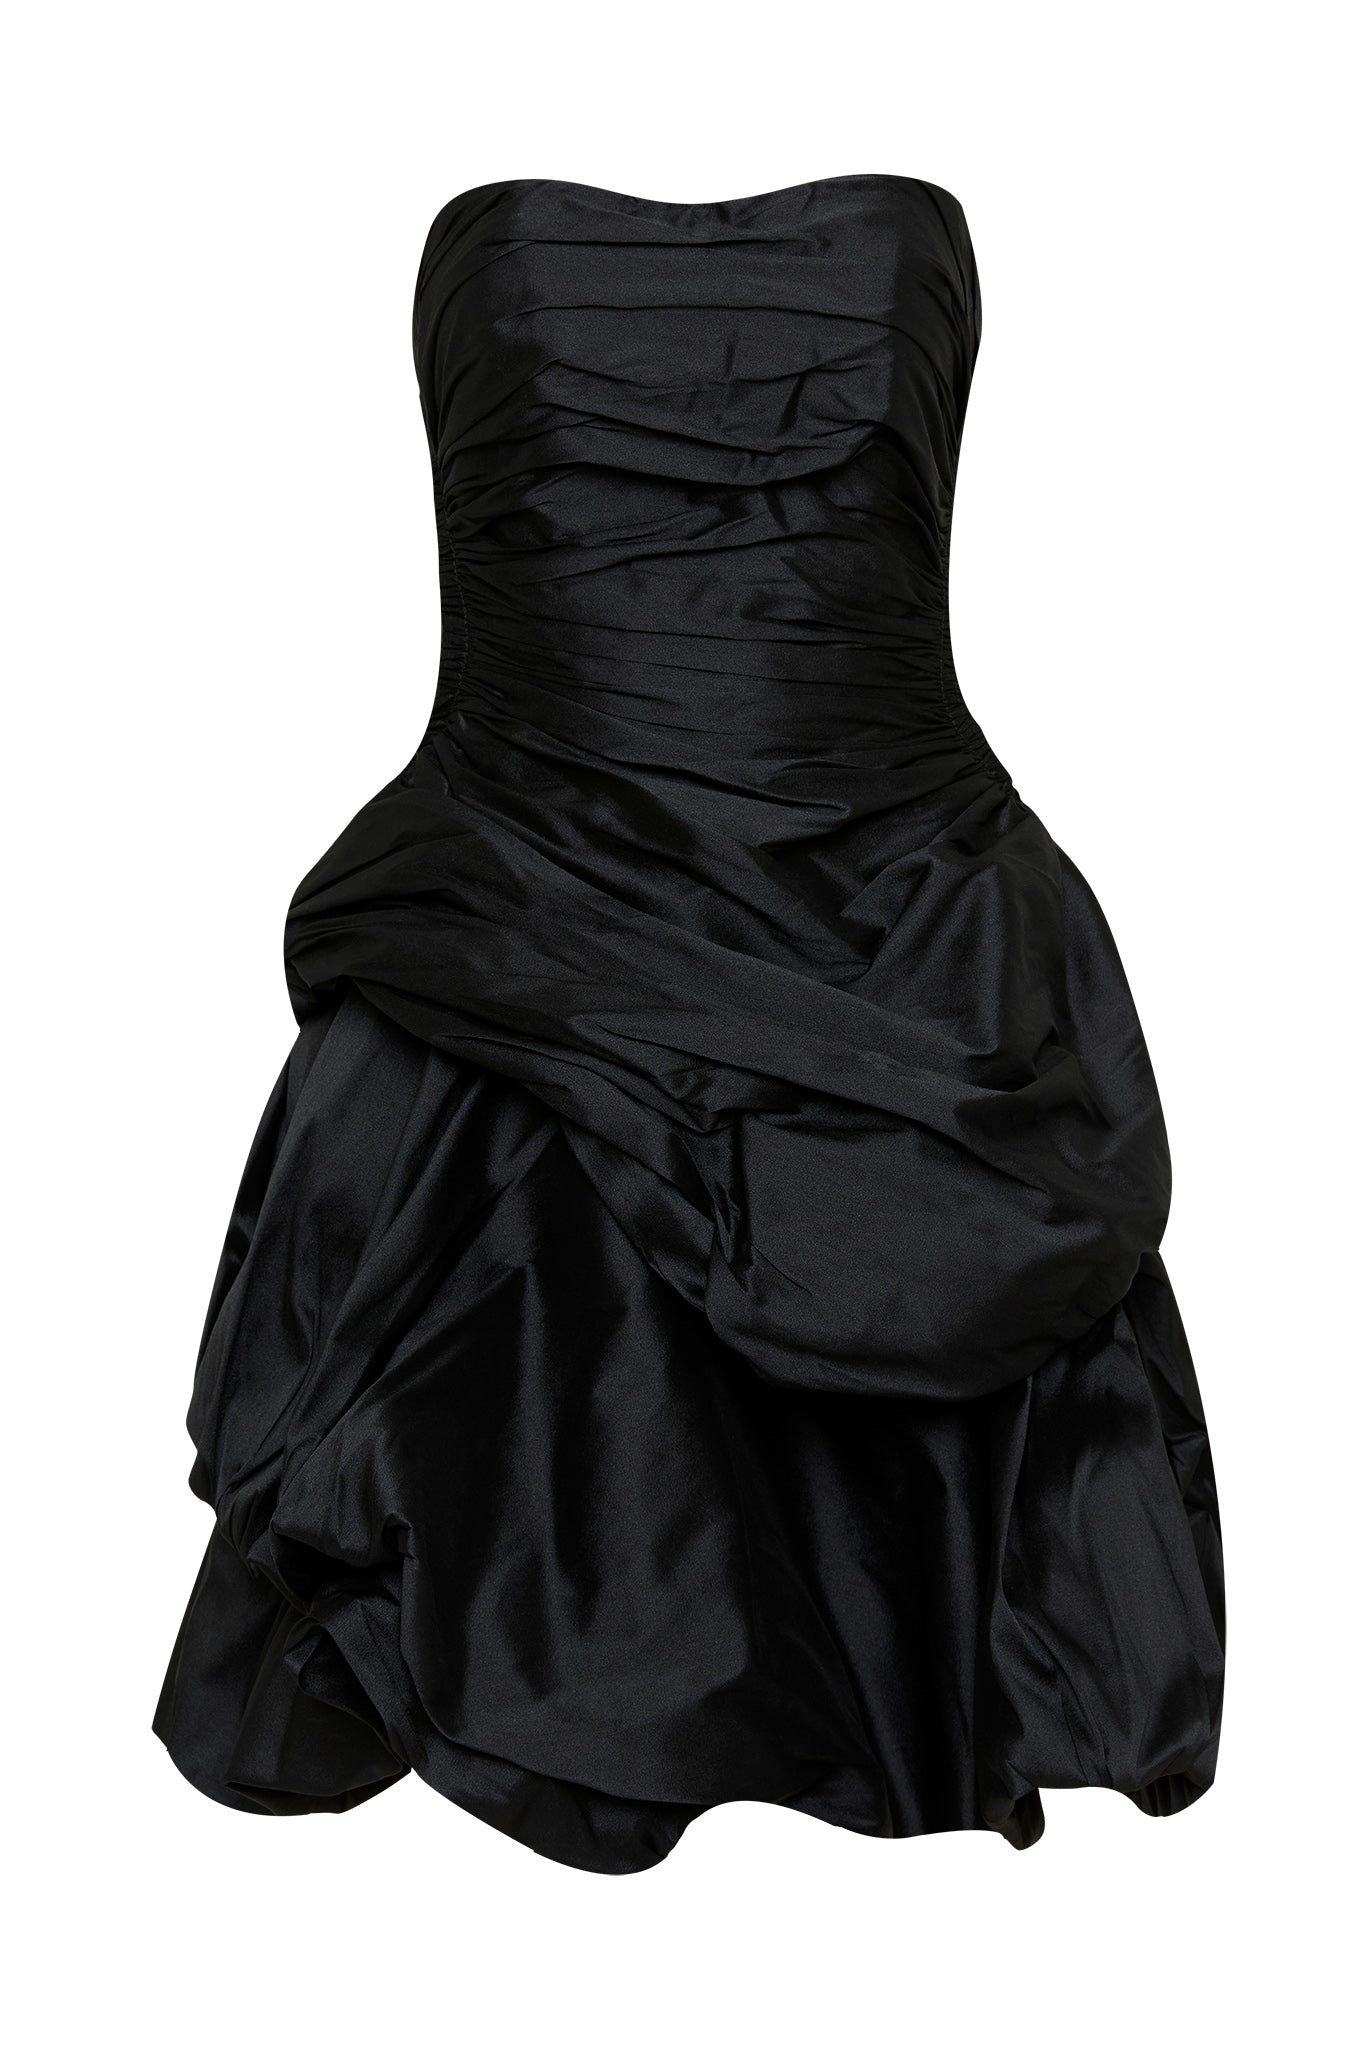 Daybreak Strapless Mini Dress, Black